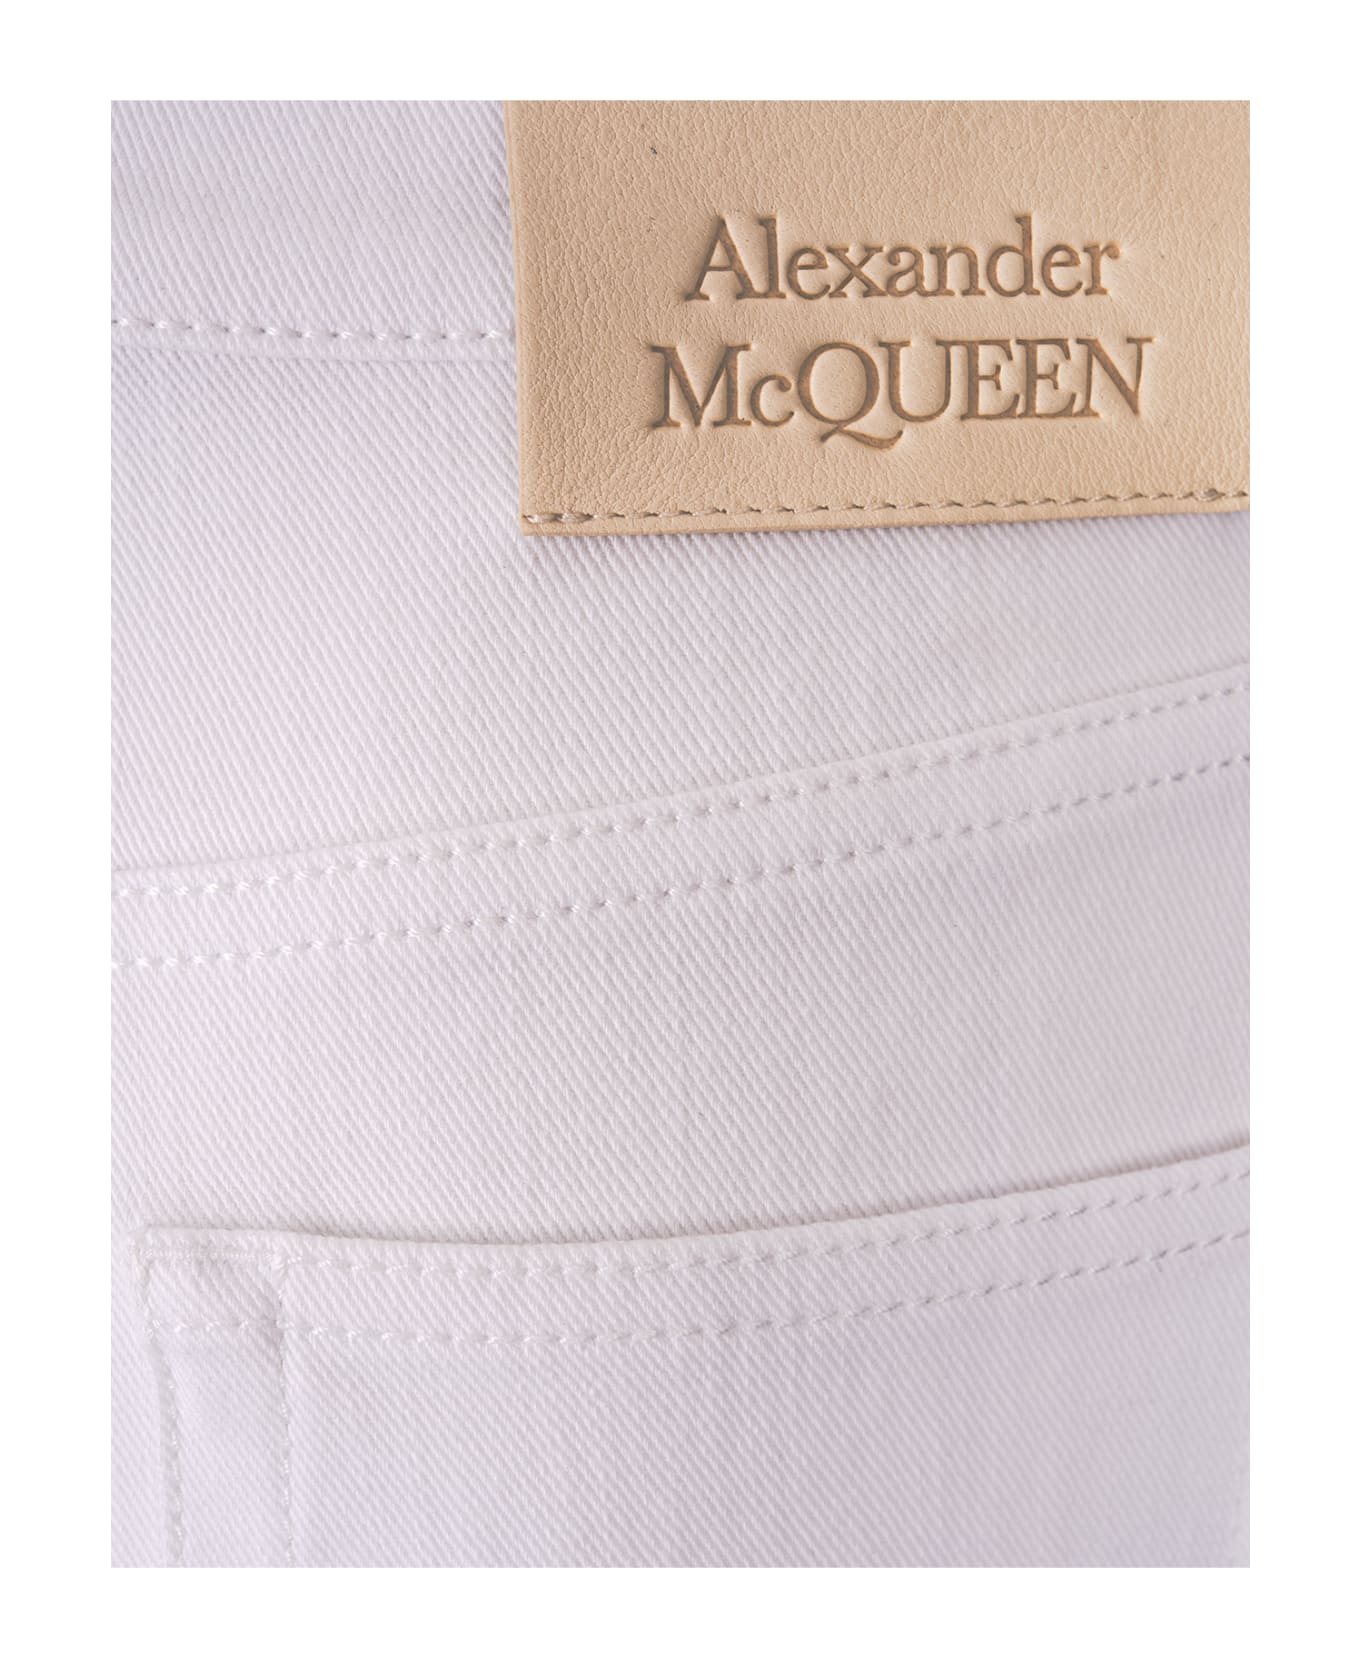 Alexander McQueen Flared Jeans In White Denim - White